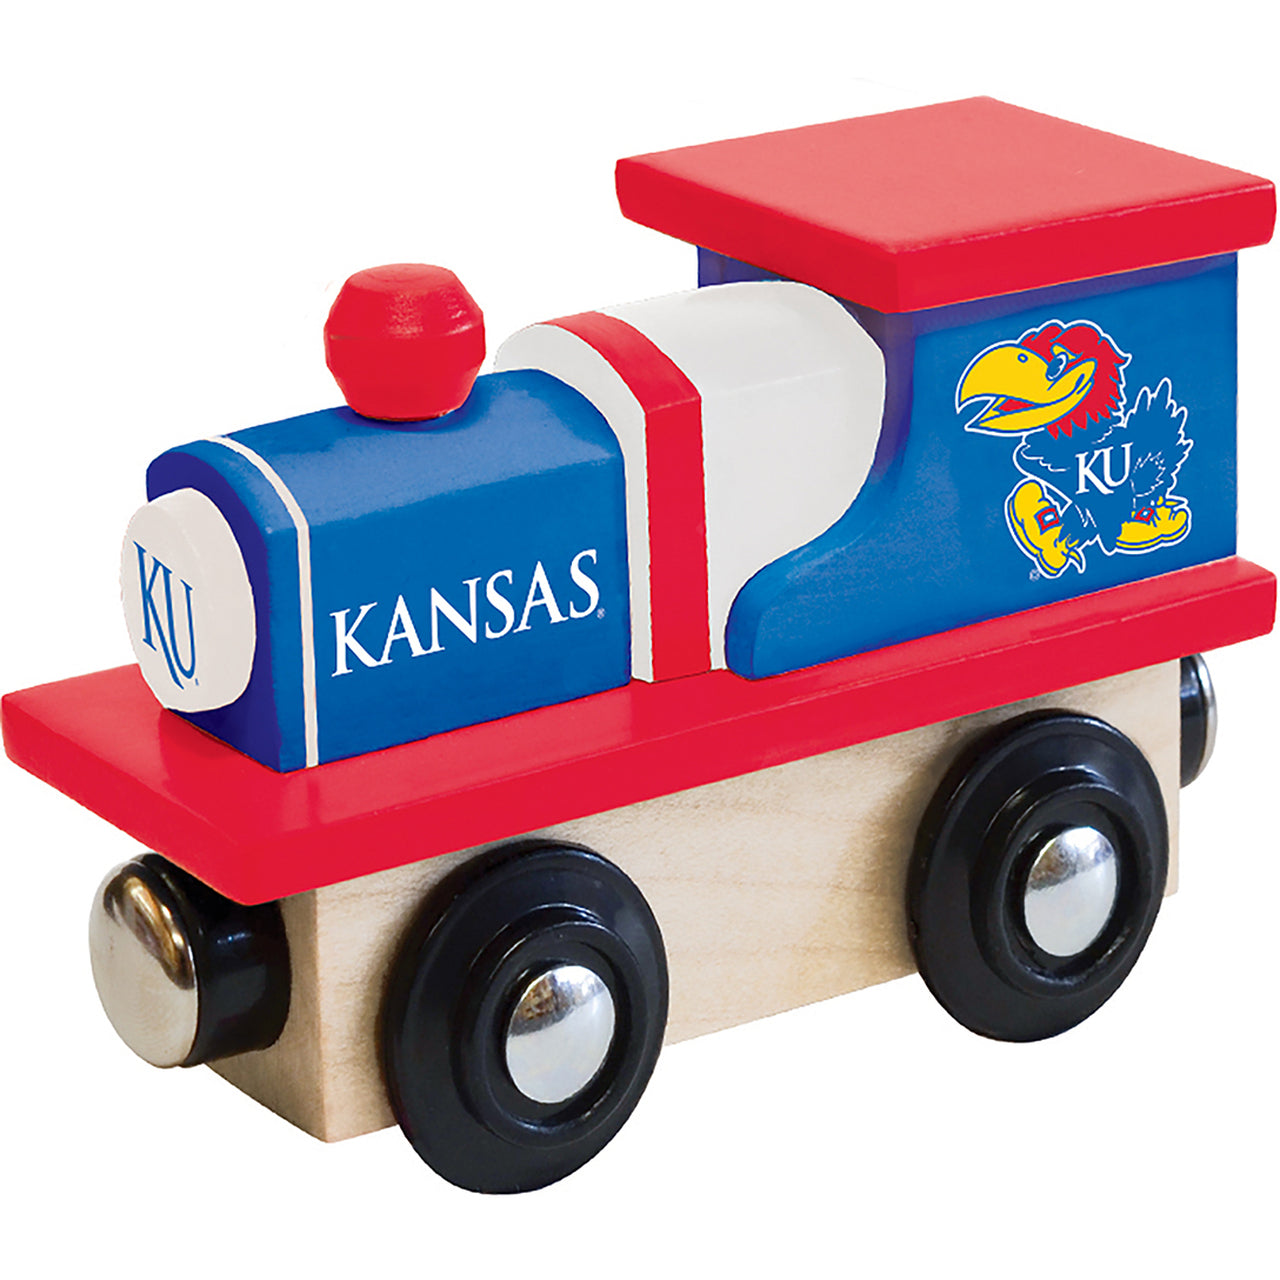 Kansas Jayhawks Wooden Toy Train Engine by Masterpieces